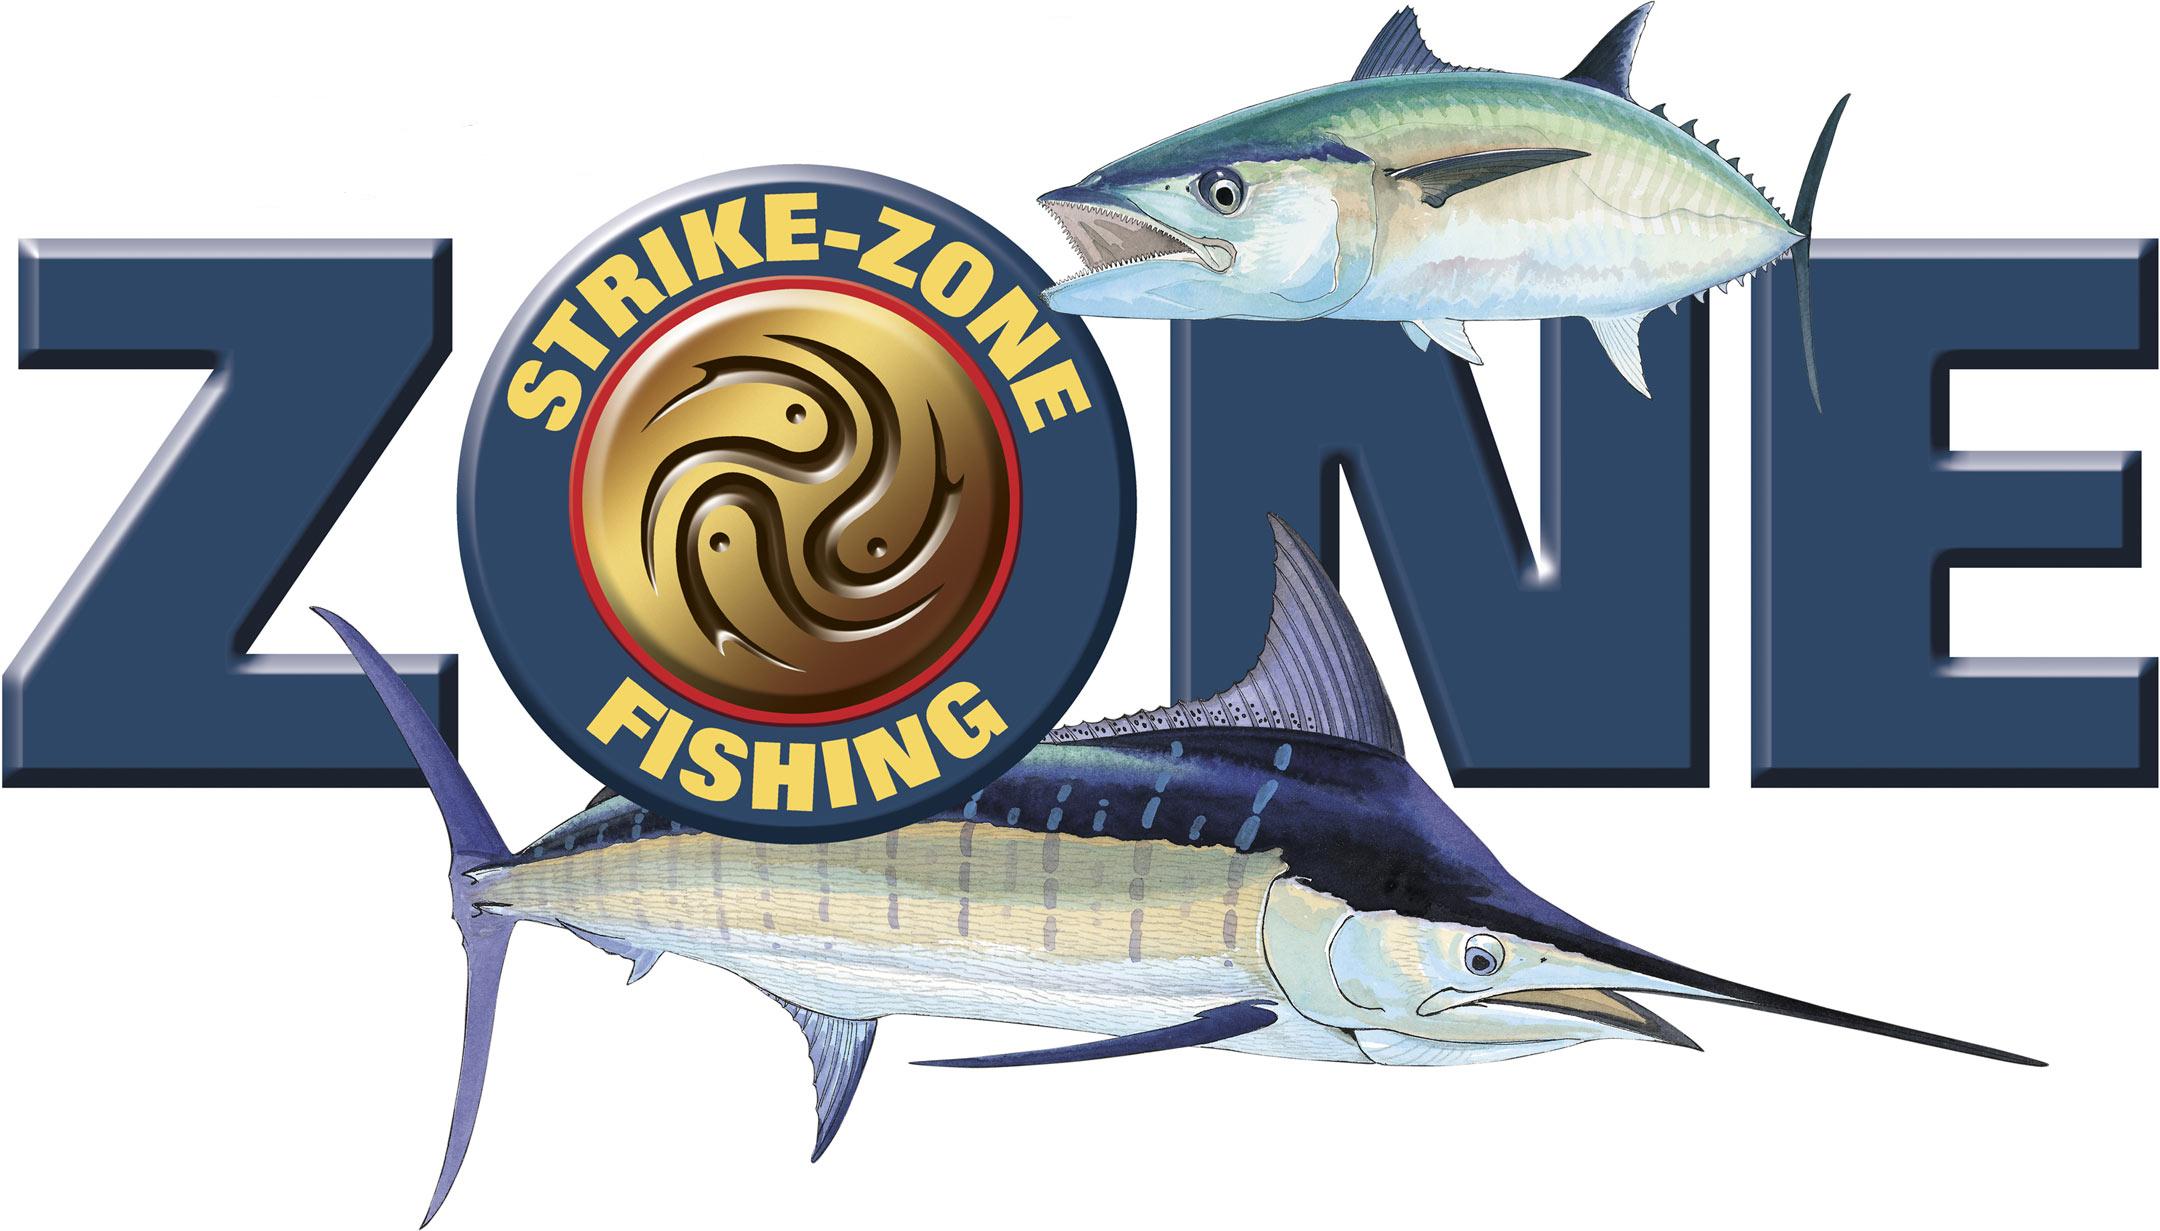 Strike-Zone Fishing, Melbourne